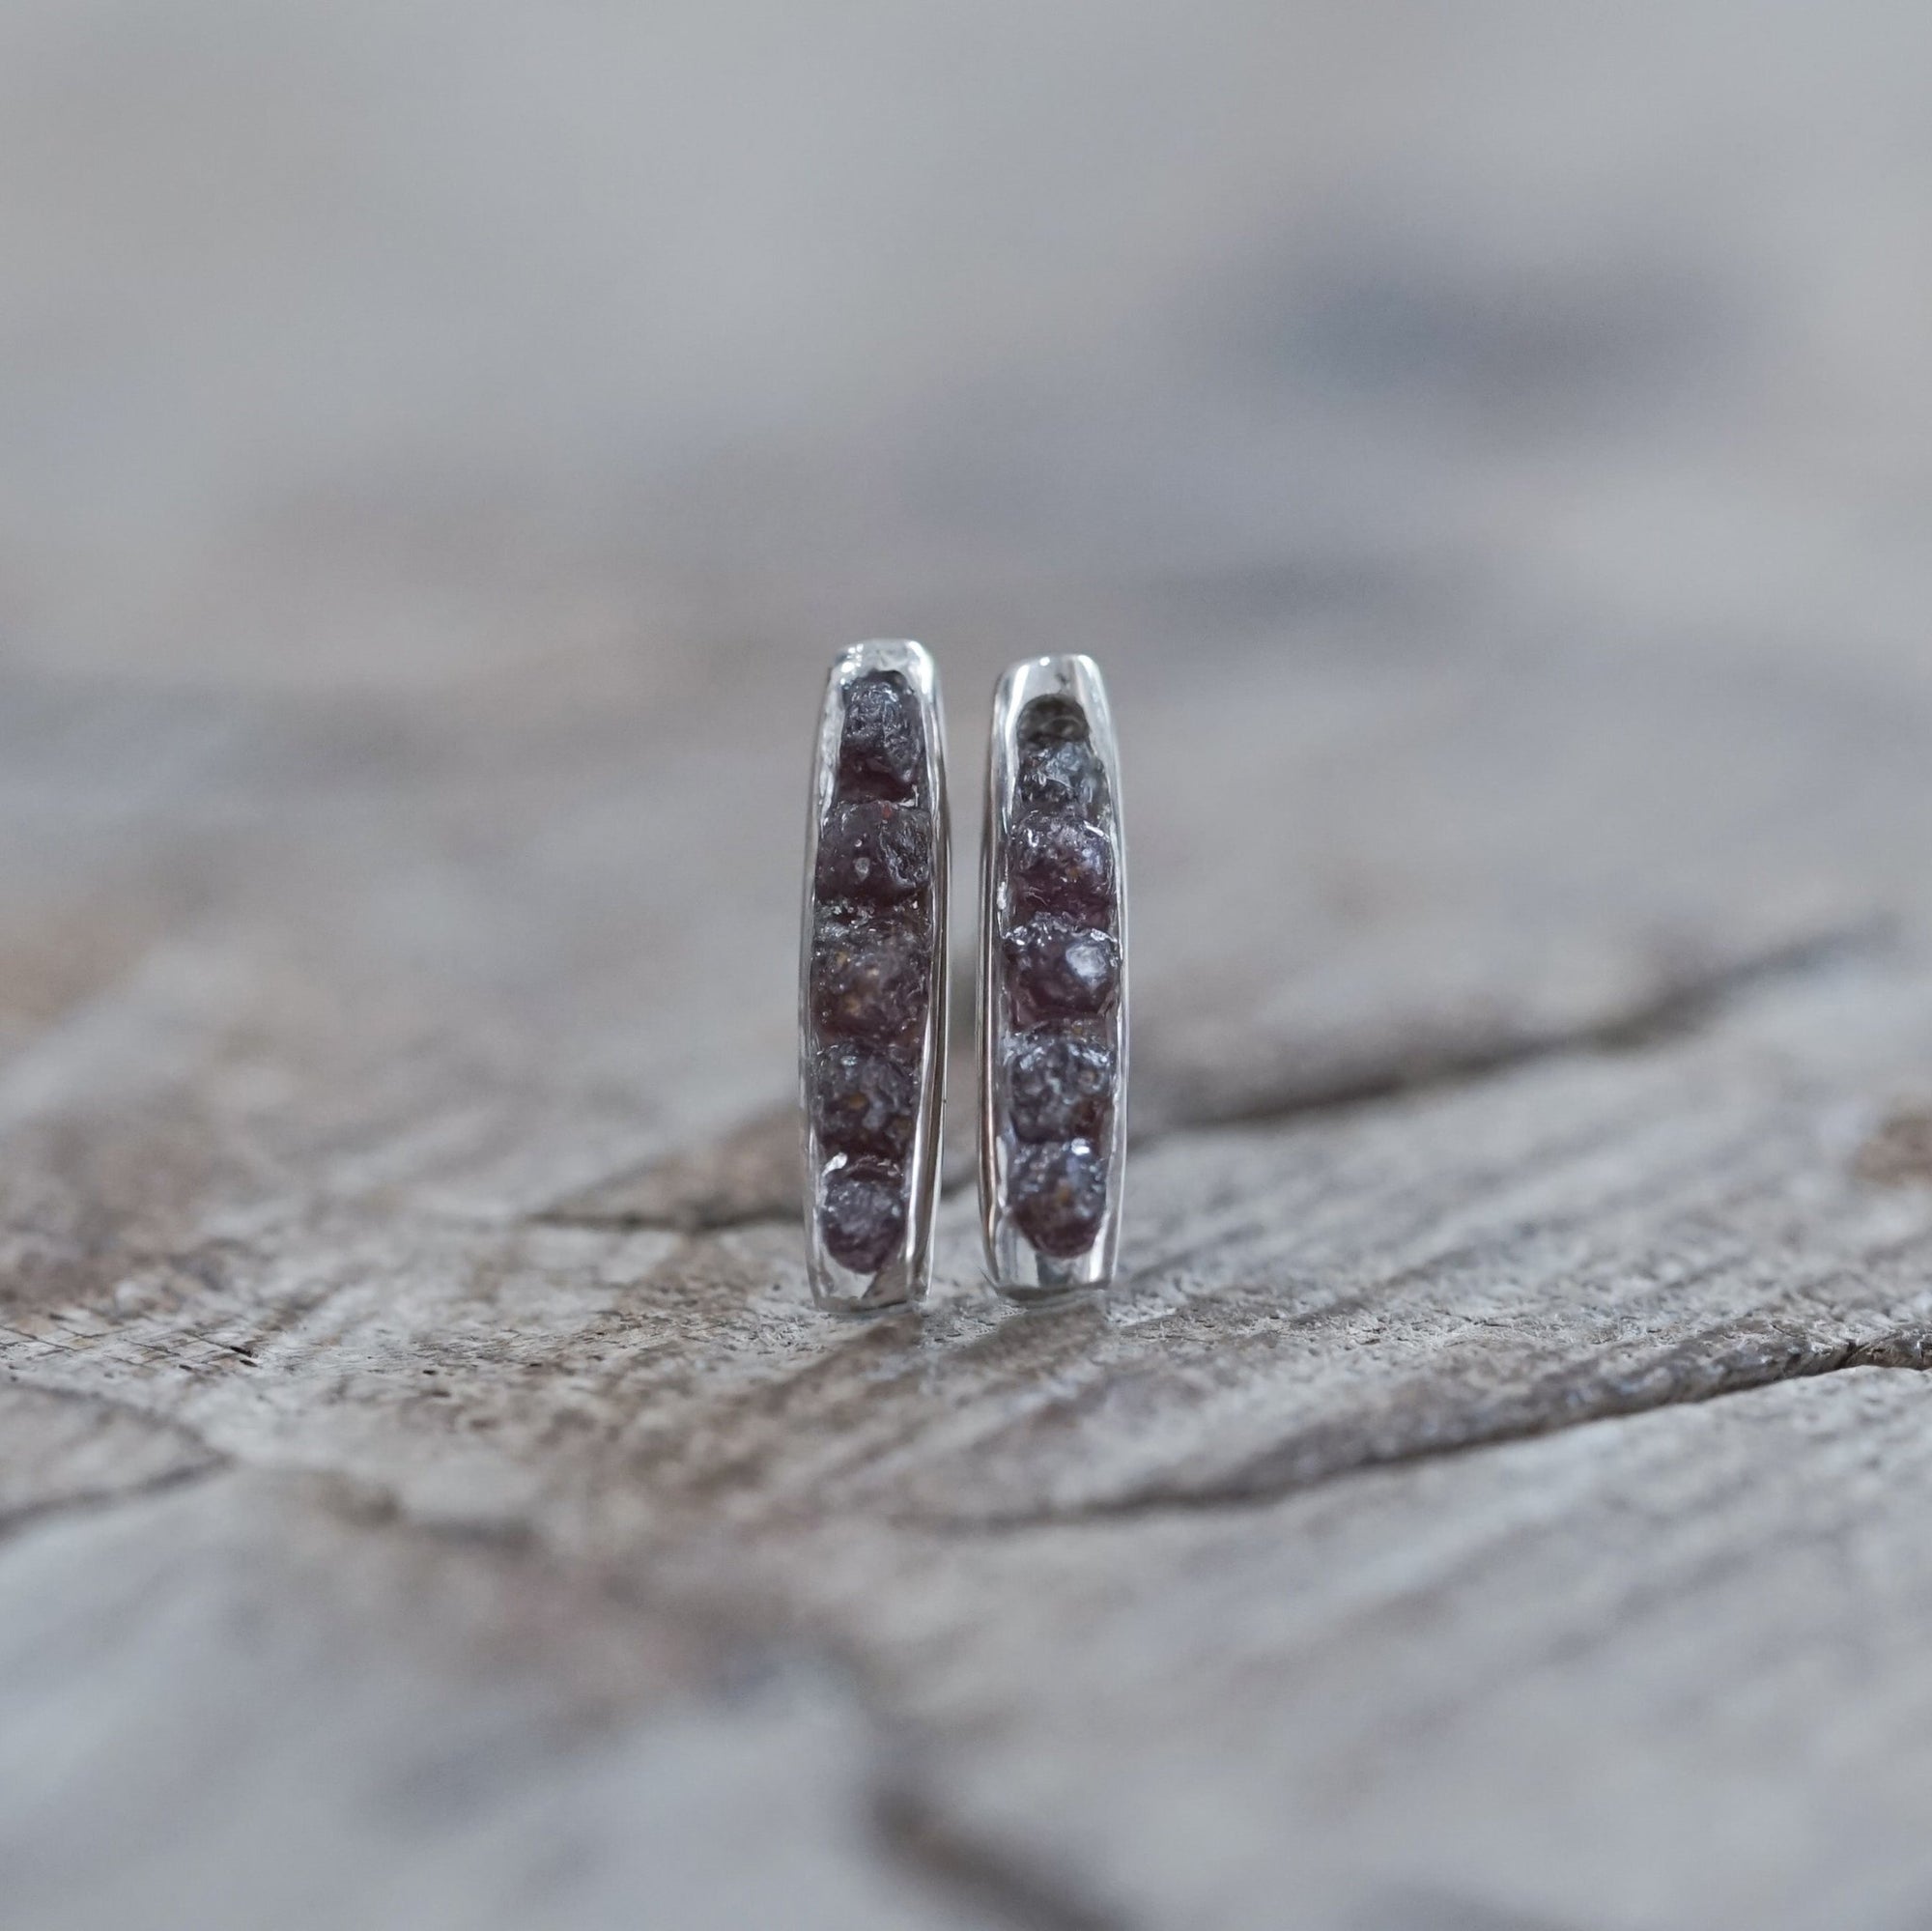 Rough Garnet Earrings with Hidden Gems - Gardens of the Sun | Ethical Jewelry